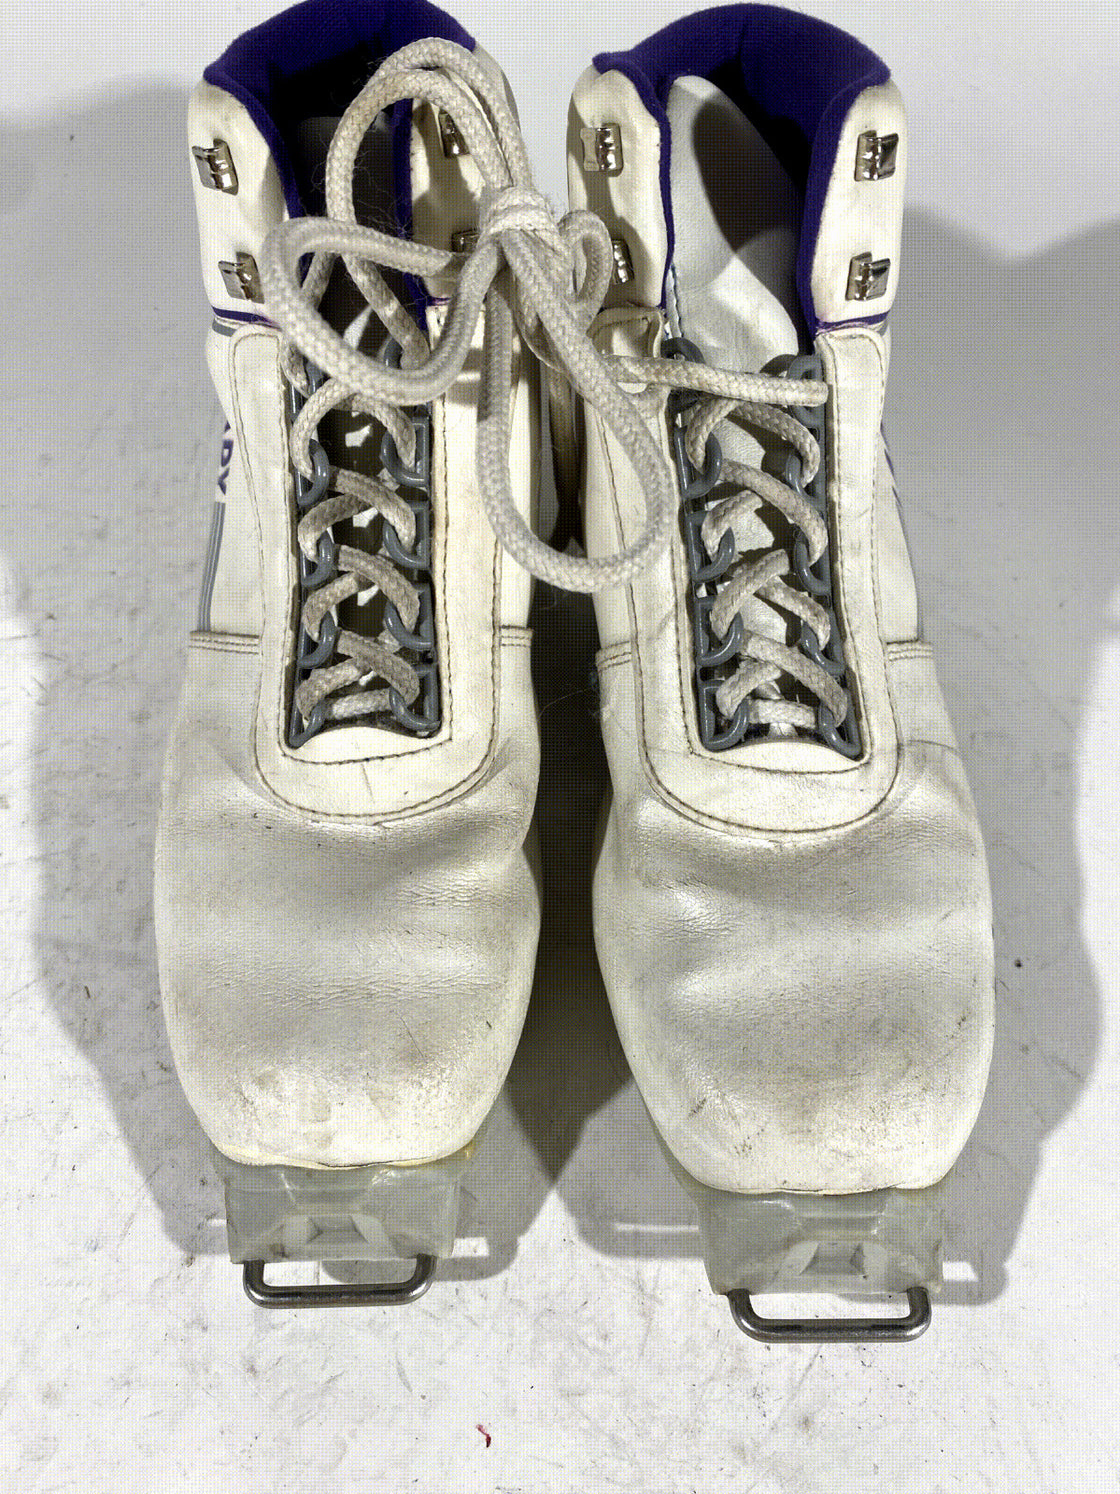 Jalas Lady Vintage Nordic Cross Country Ski Boots EU40 US8.5 SNS Old Bindings